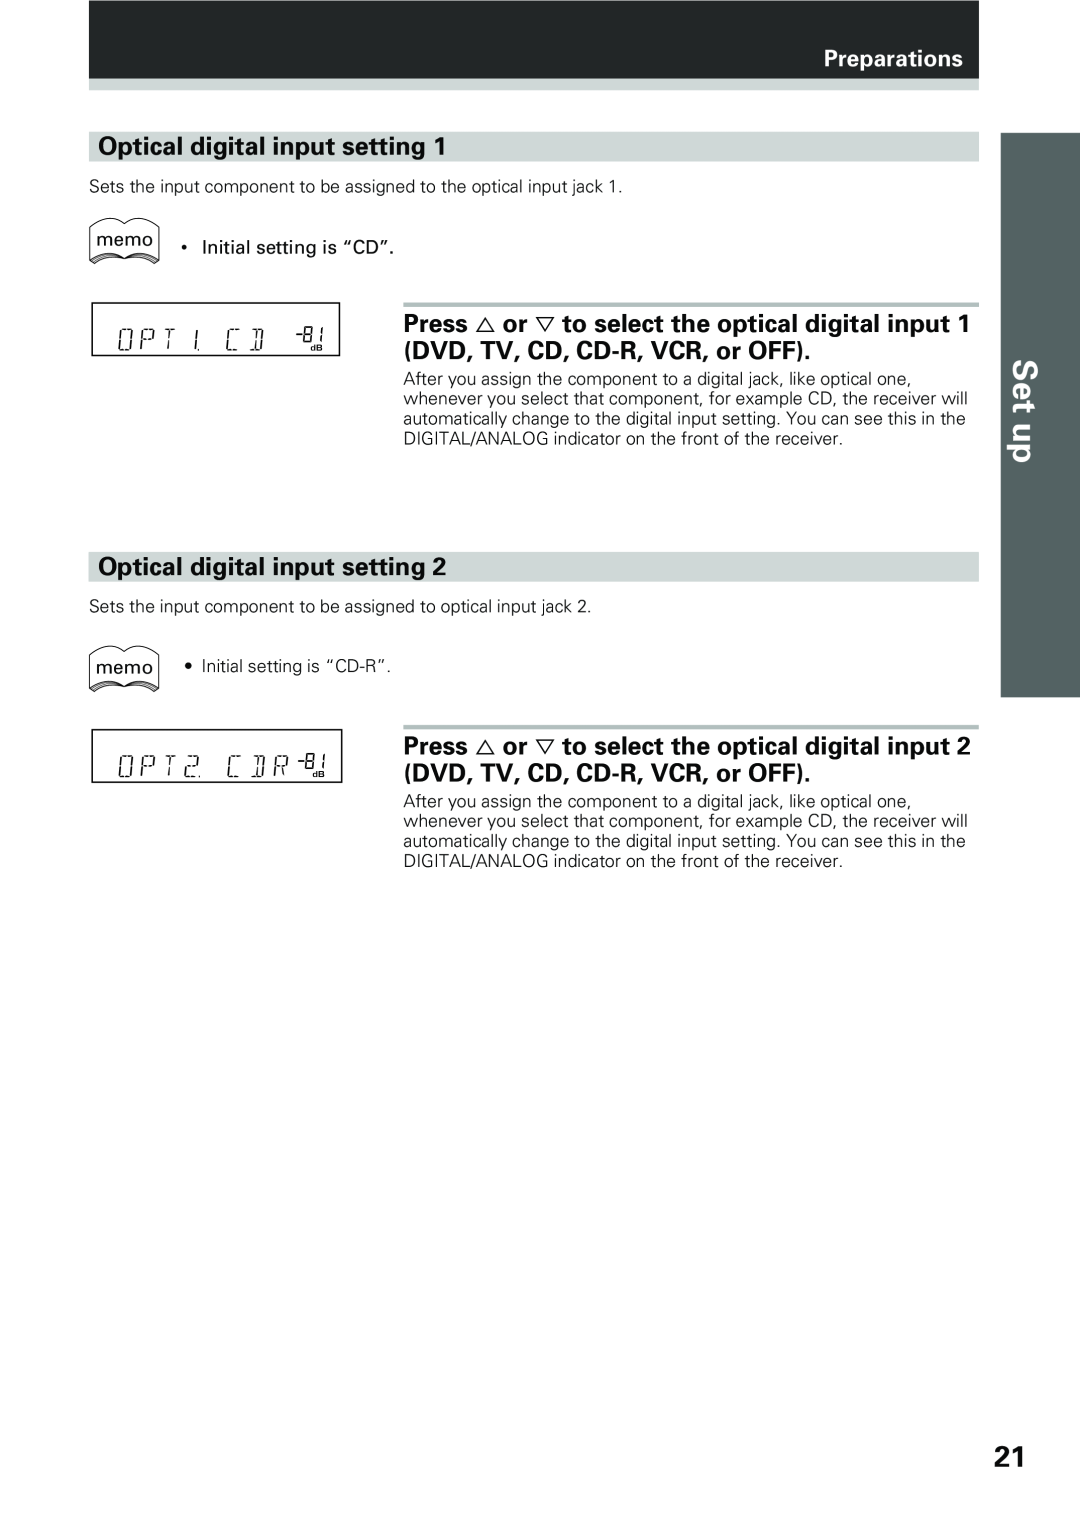 Pioneer VSX-D409 Optical digital input setting, Press % or Þ to select the optical digital input, Set up, Preparations 